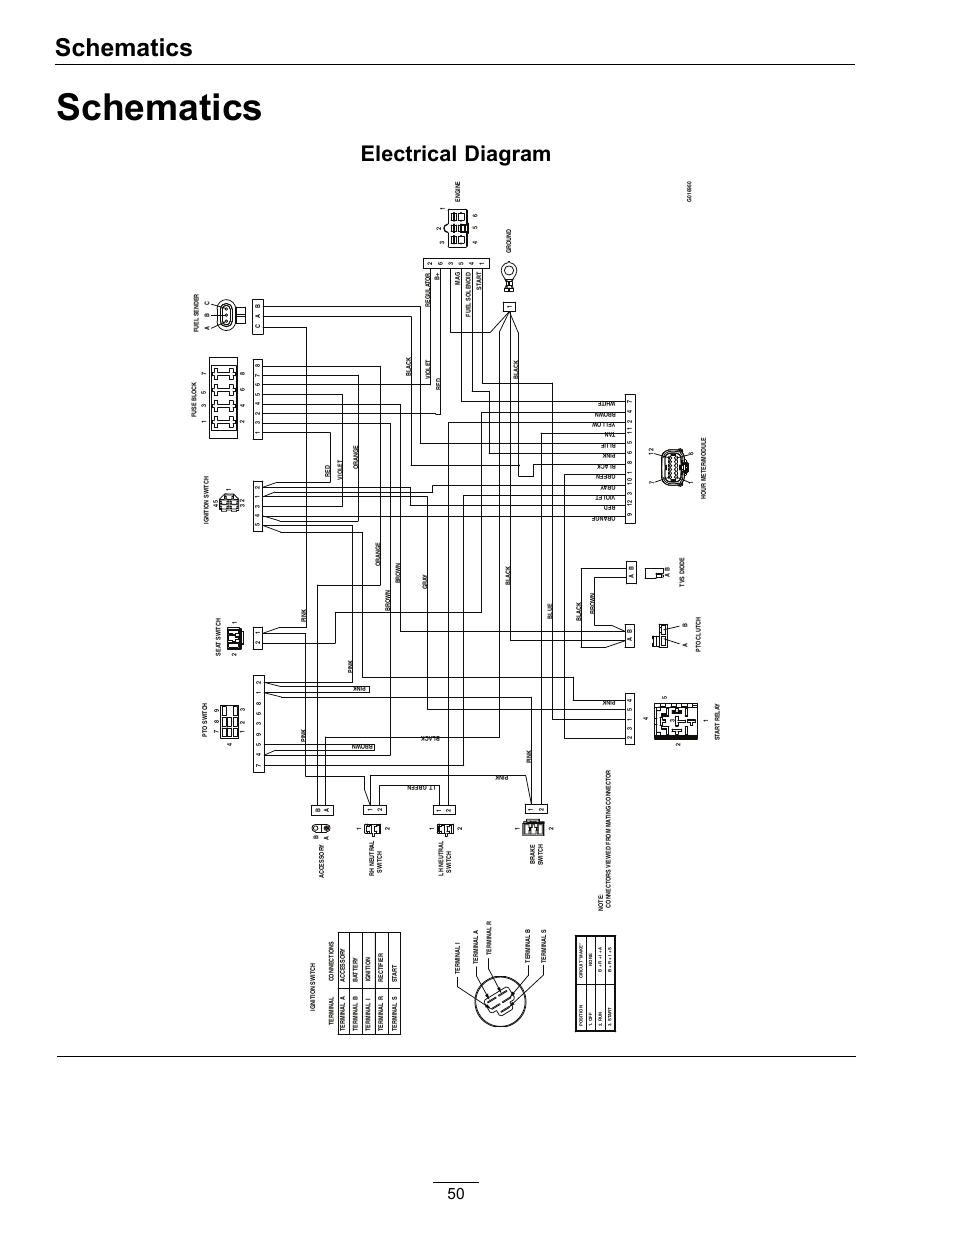 1969 spitfire mkiii wiring diagram